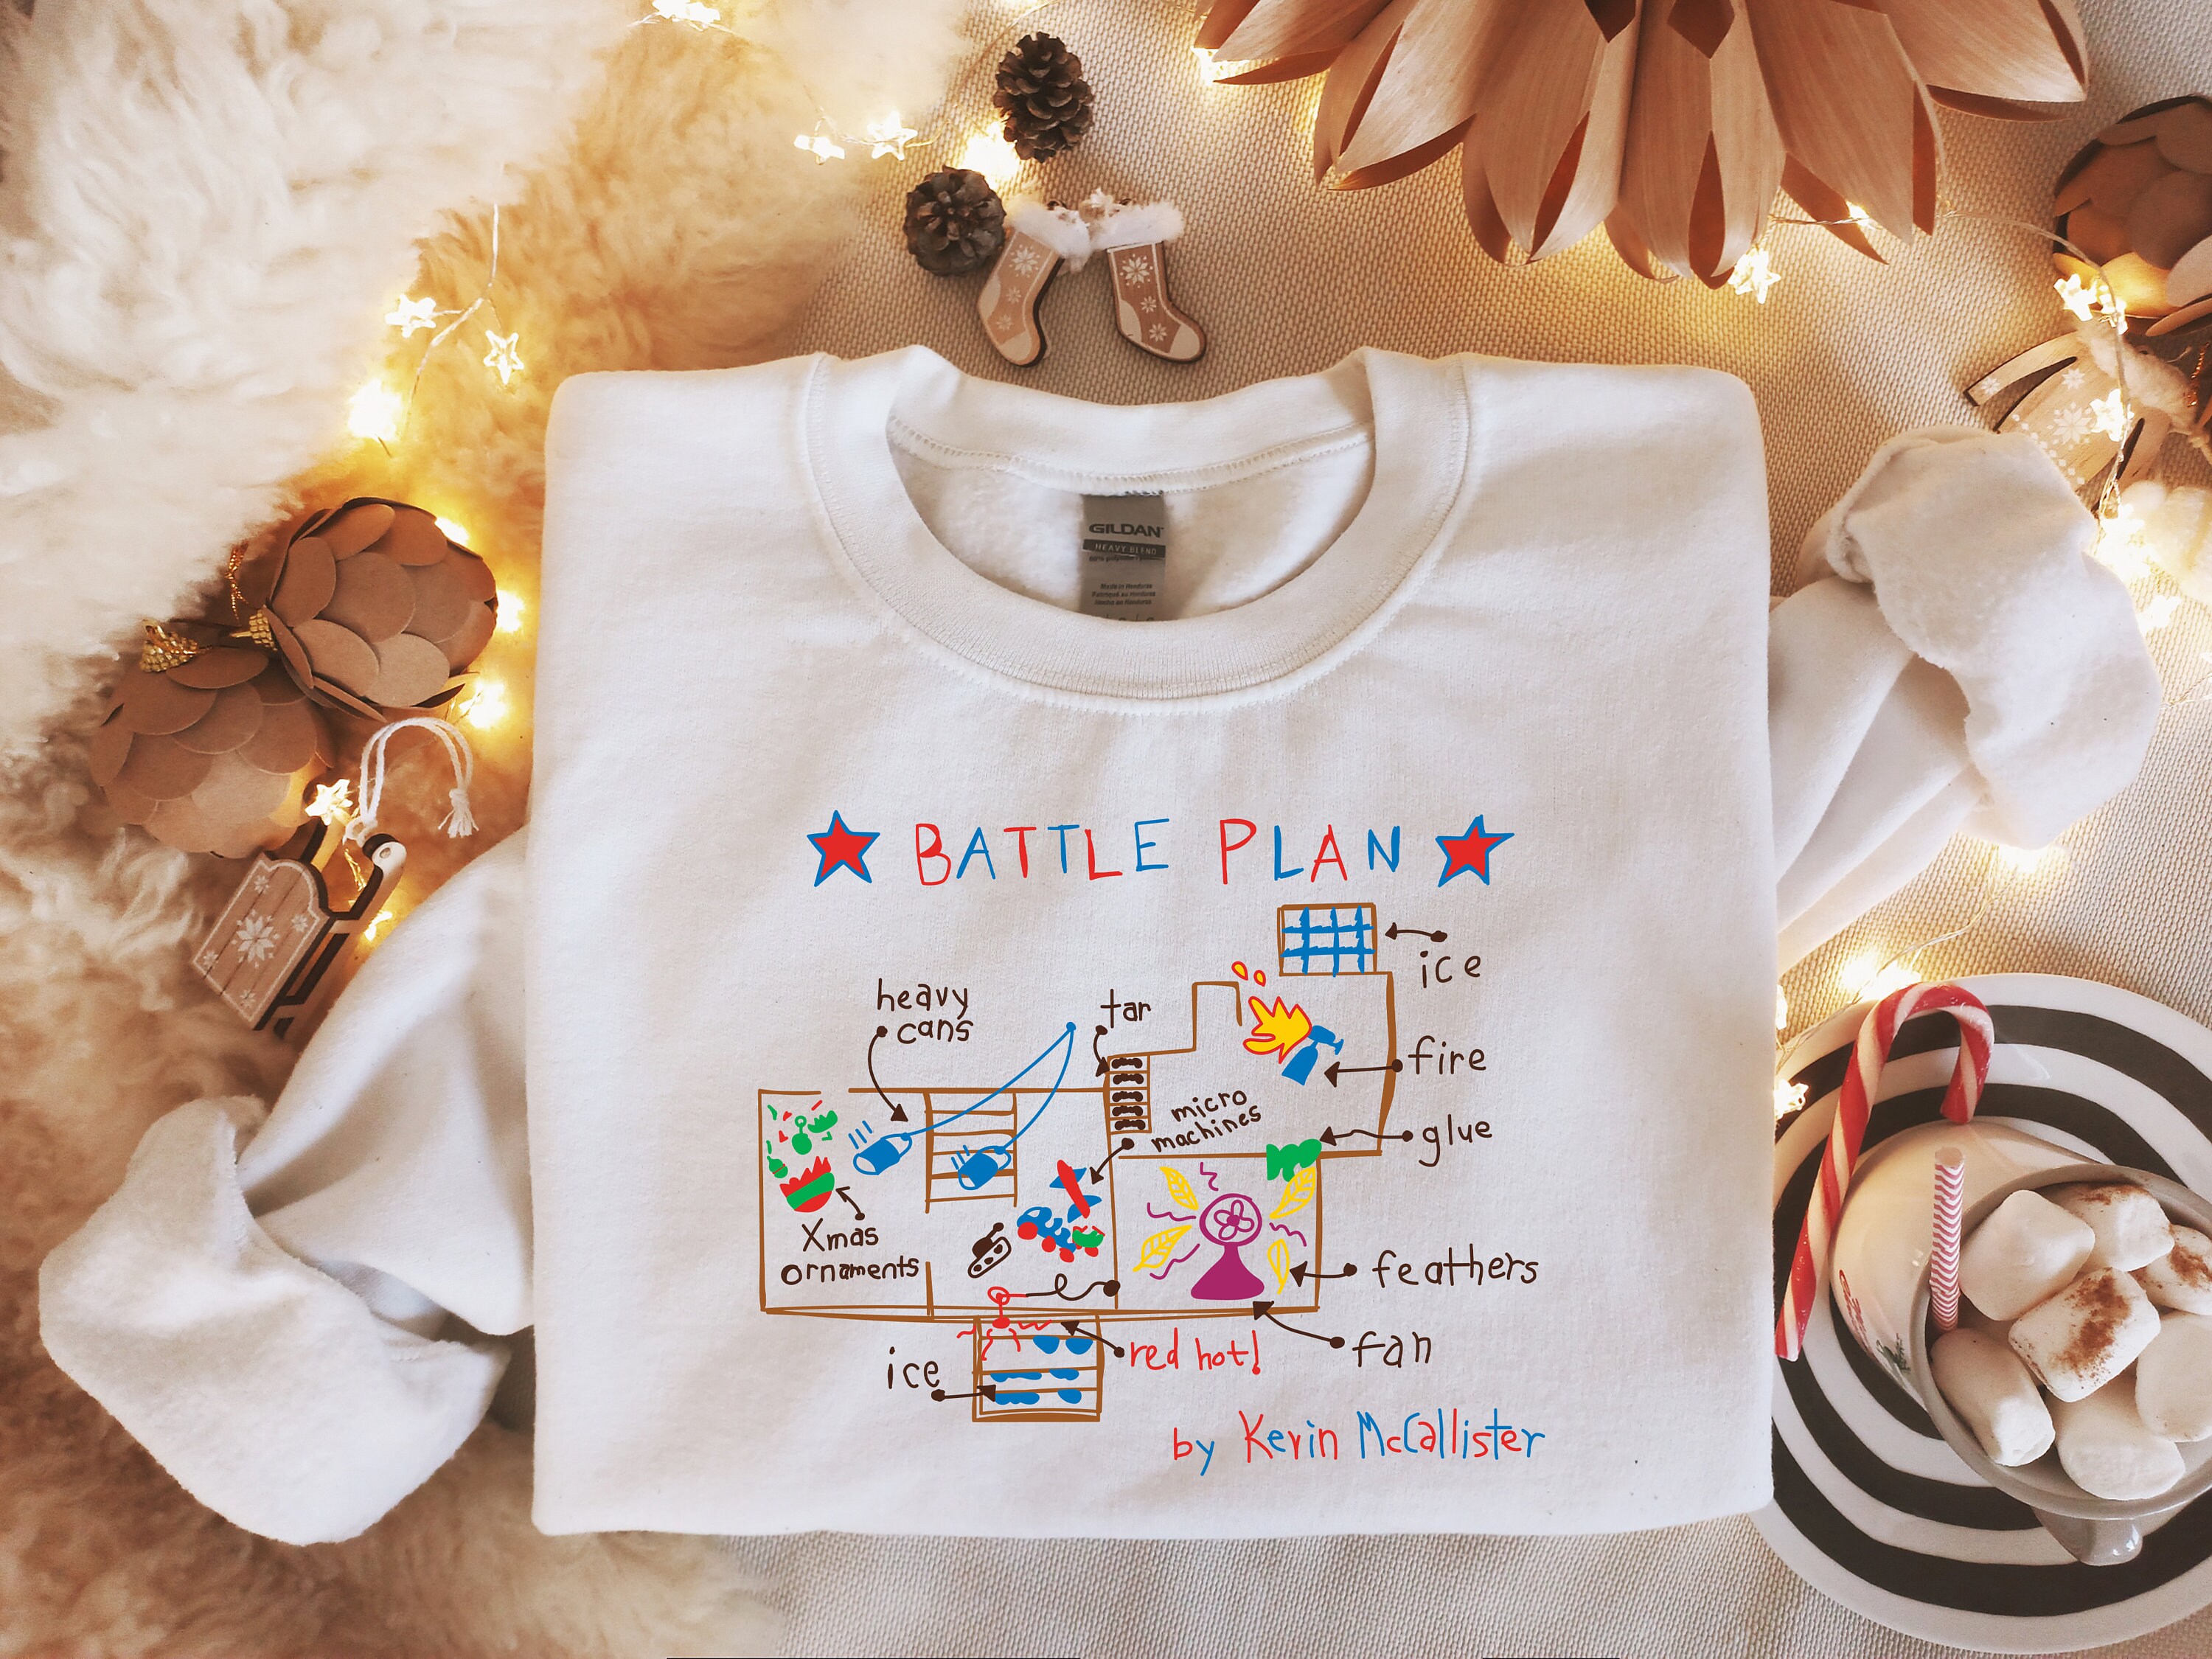 Discover Battle Plan Sweatshirt, Christmas Movie Sweatshirt, Cozy Sweater, Holiday Sweater, Christmas Shirt, Xmas Shirt, Christmas Family Sweatshirts